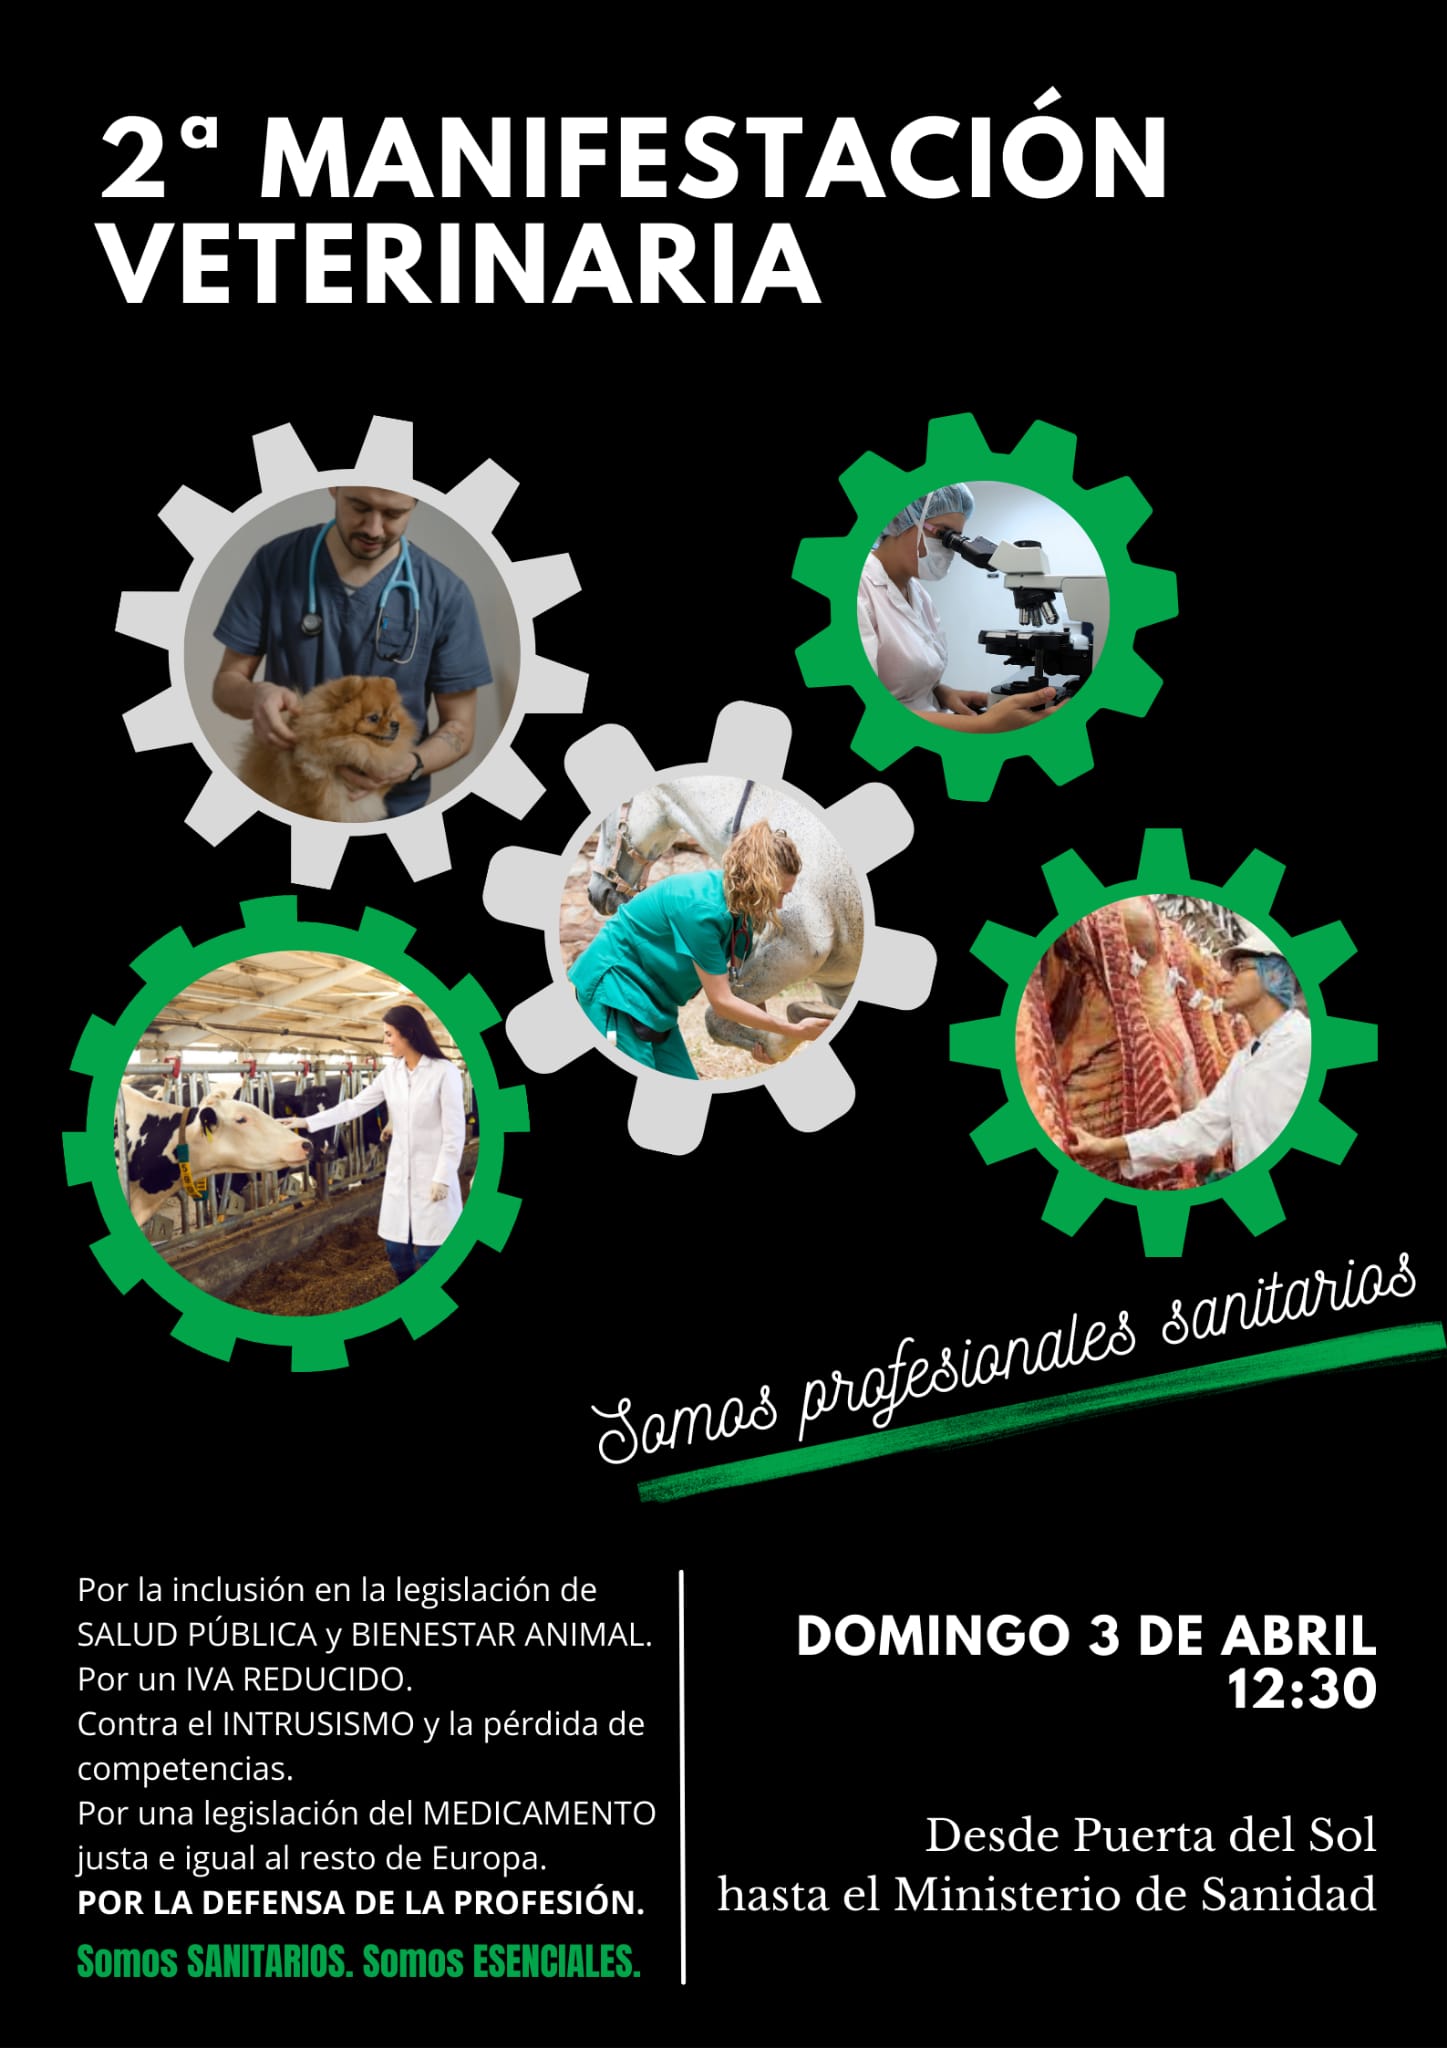 AXON COMUNICACION, Manifestación veterinaria domingo 3 de abril